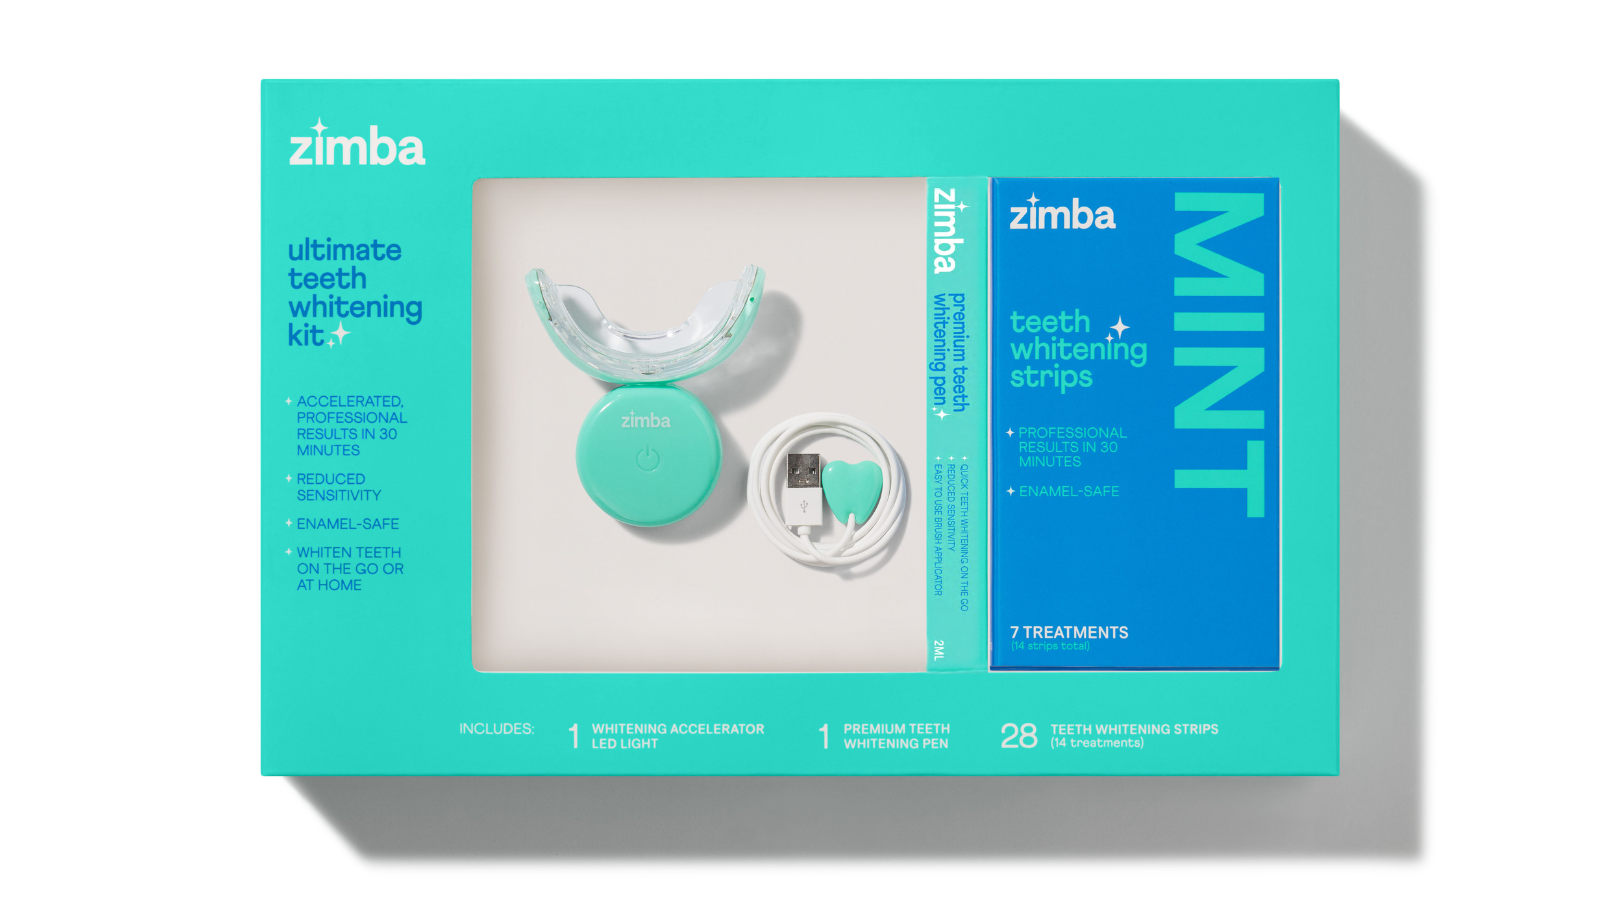 Teeth whitening methods: Home kits by Zimba